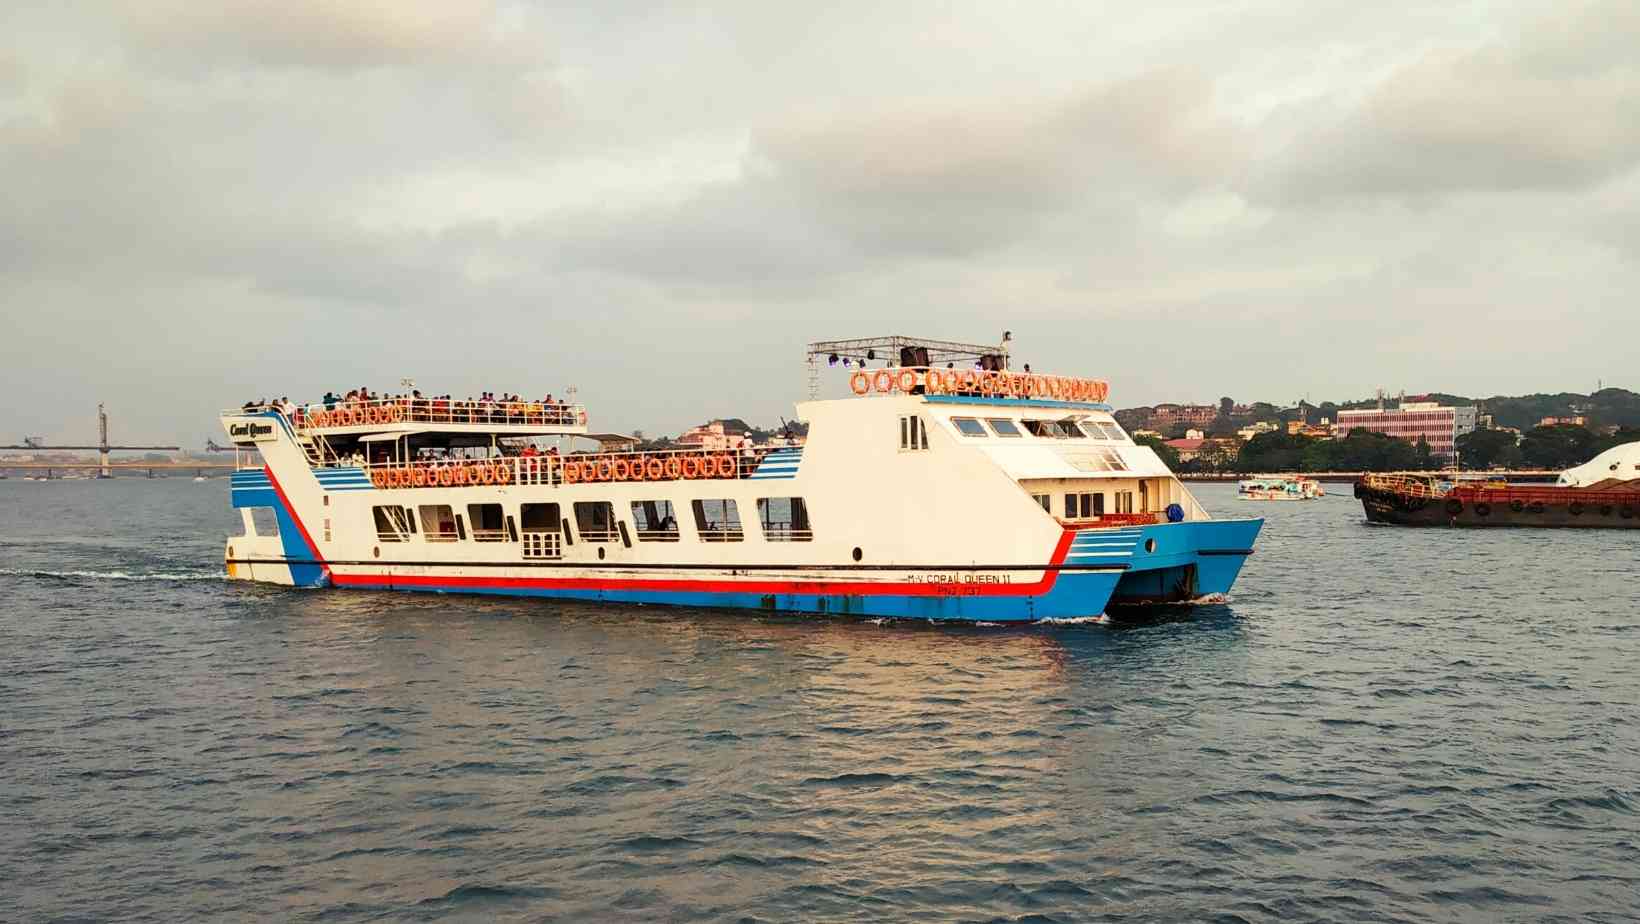 The Goa river cruise